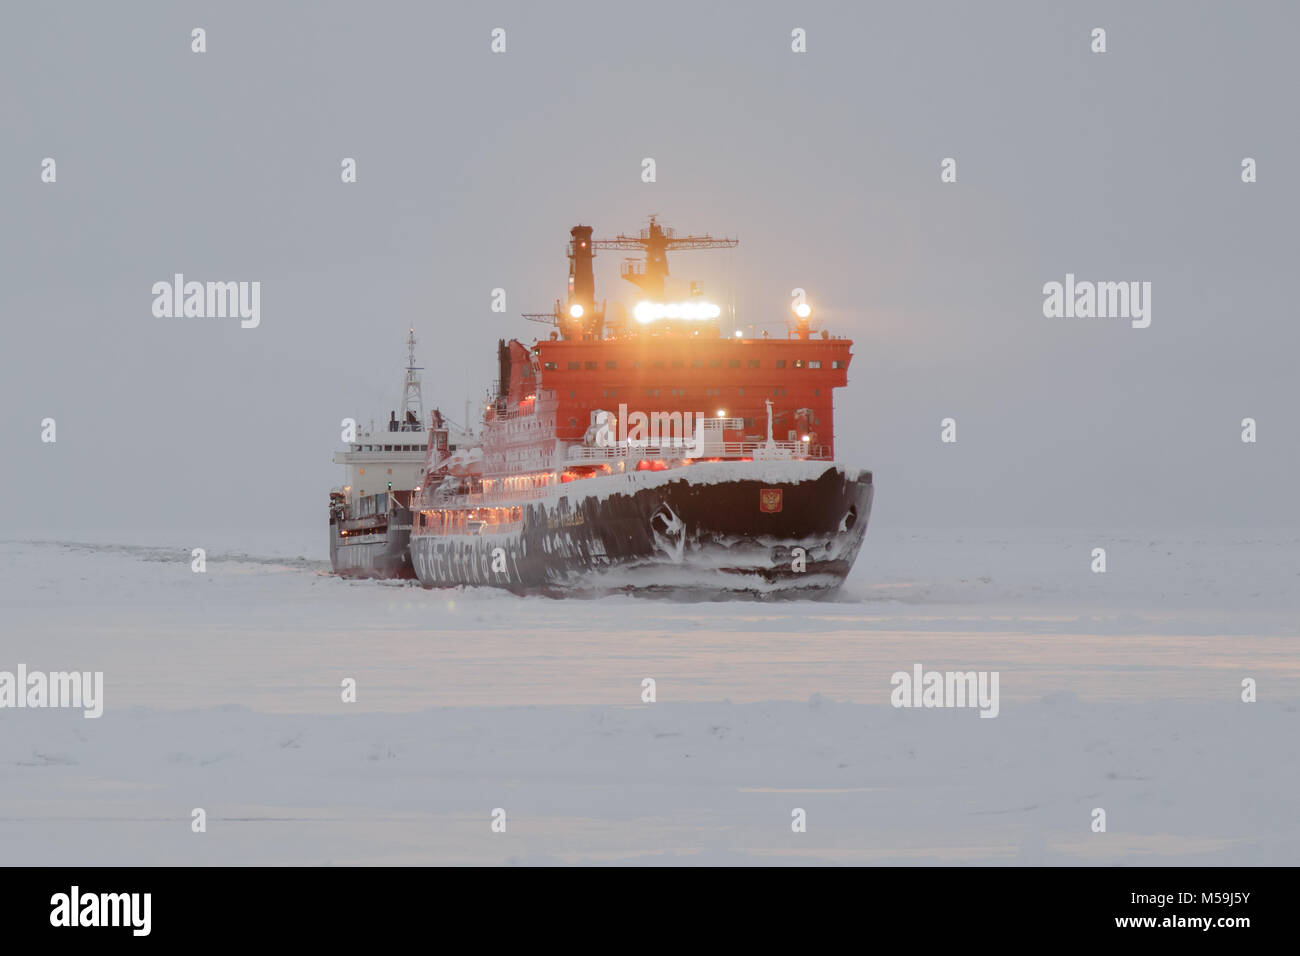 Pevek, Chukchi region, Russia - Pevek, November 30th, 2017: Ice breaker '50 years of the Victory' are towed by dry-cargo ship 'Valery Vasilev'. Stock Photo